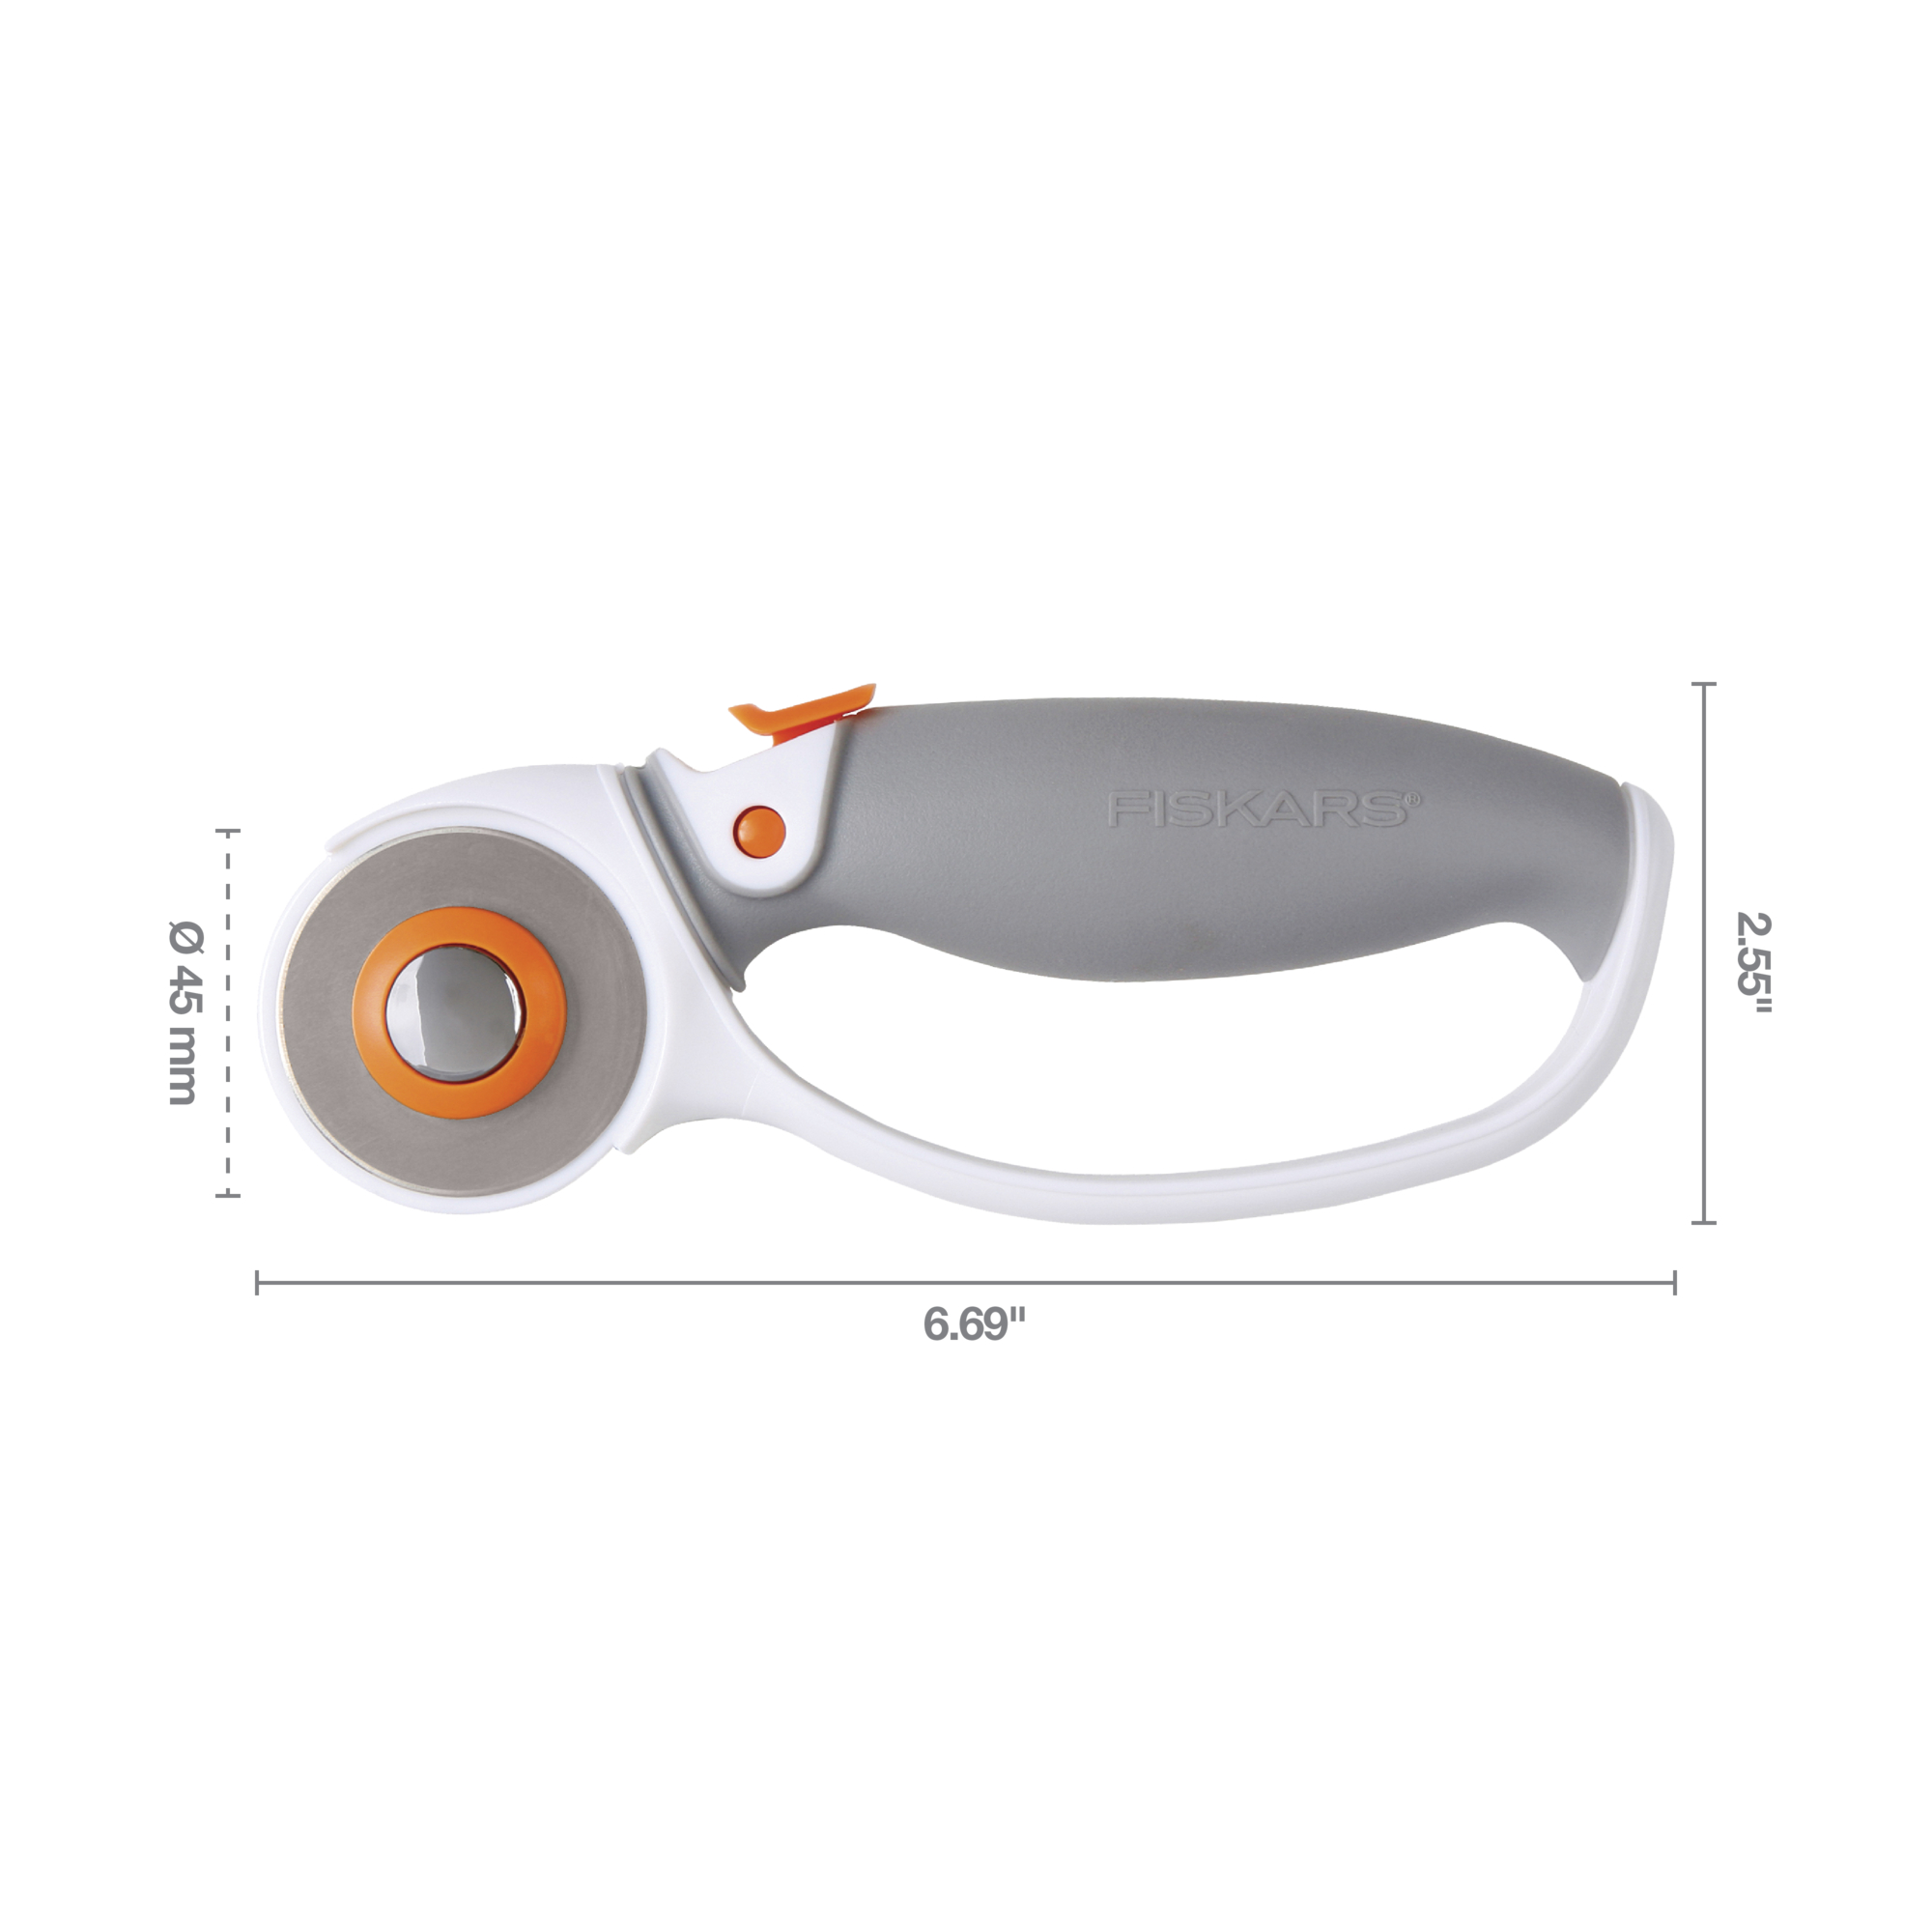 Fiskars Titanium Softgrip Comfort Loop Rotary Cutter, 45 mm - image 3 of 10